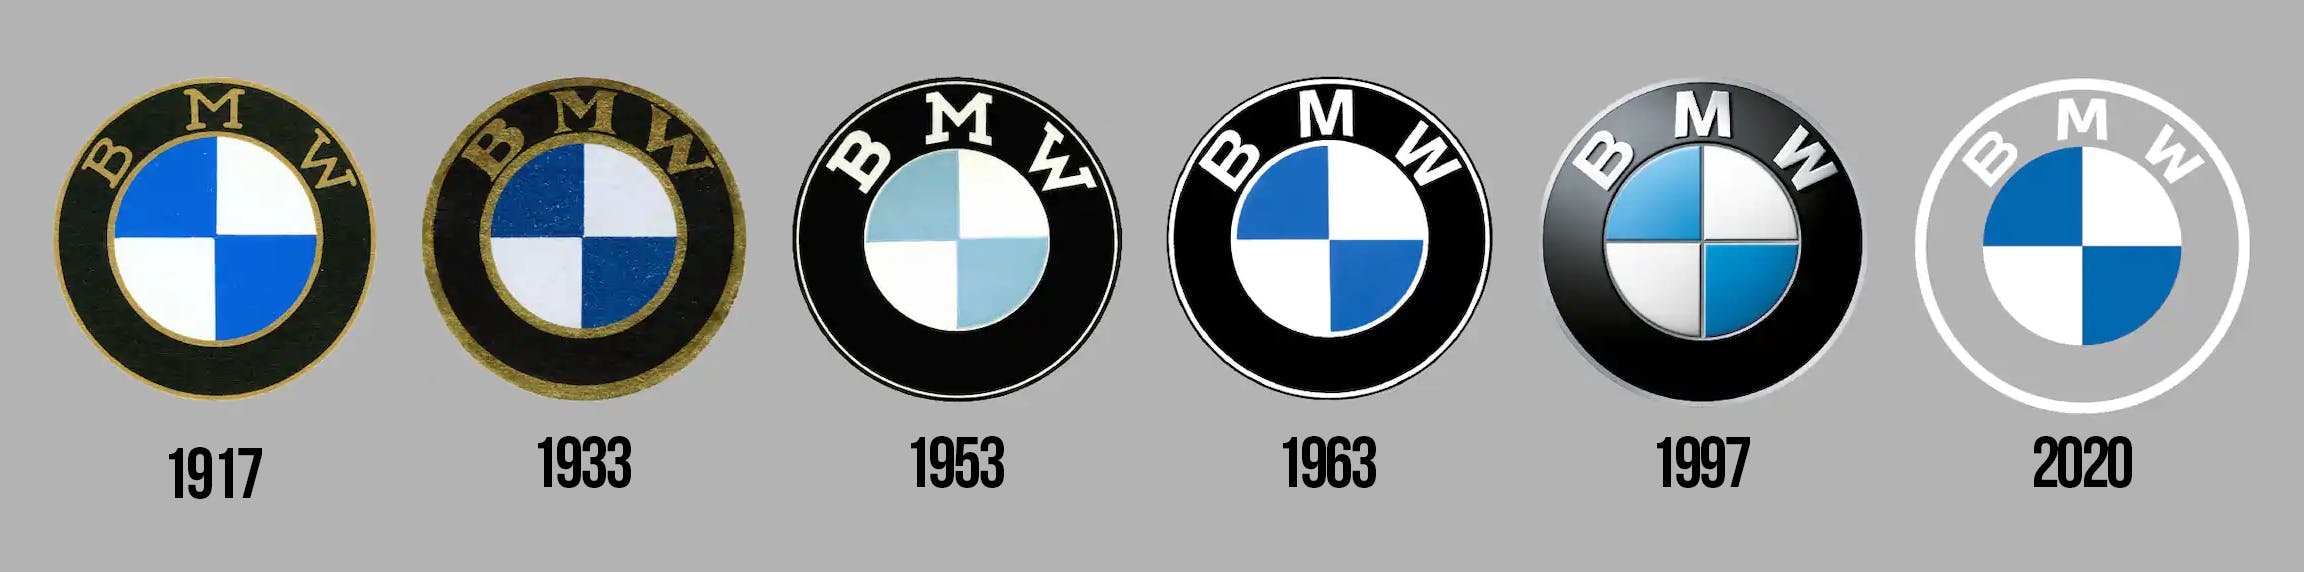 Эволюция логотипа БМВ